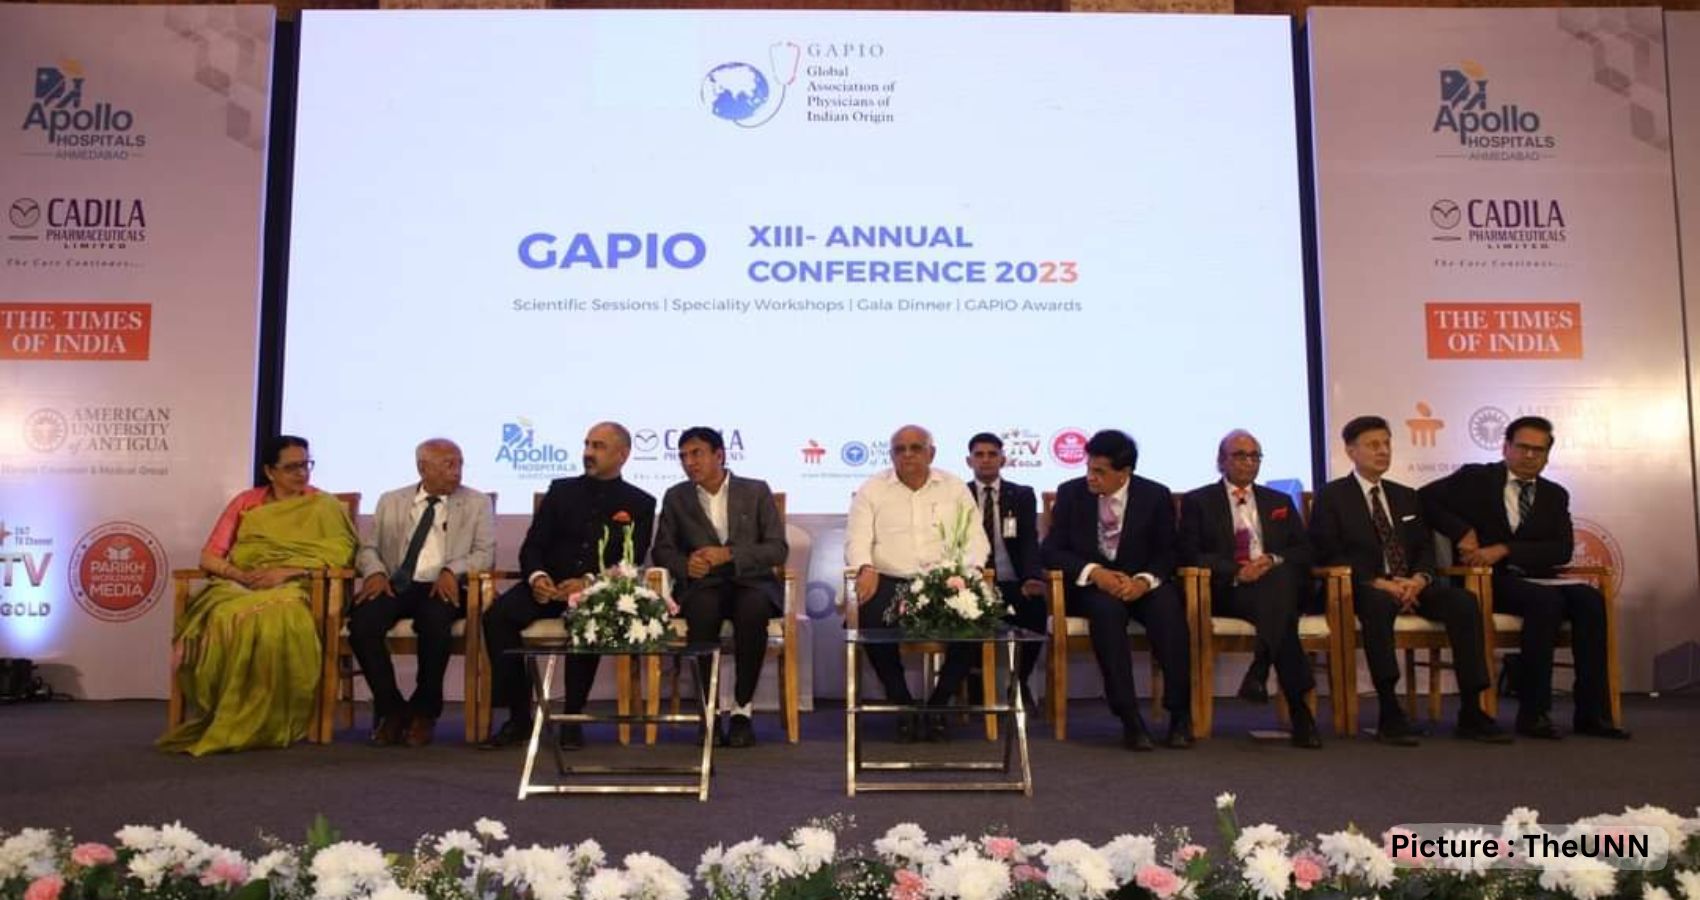 India Praises Physicians Of Indian Origin At 13th Annual GAPIO Conference